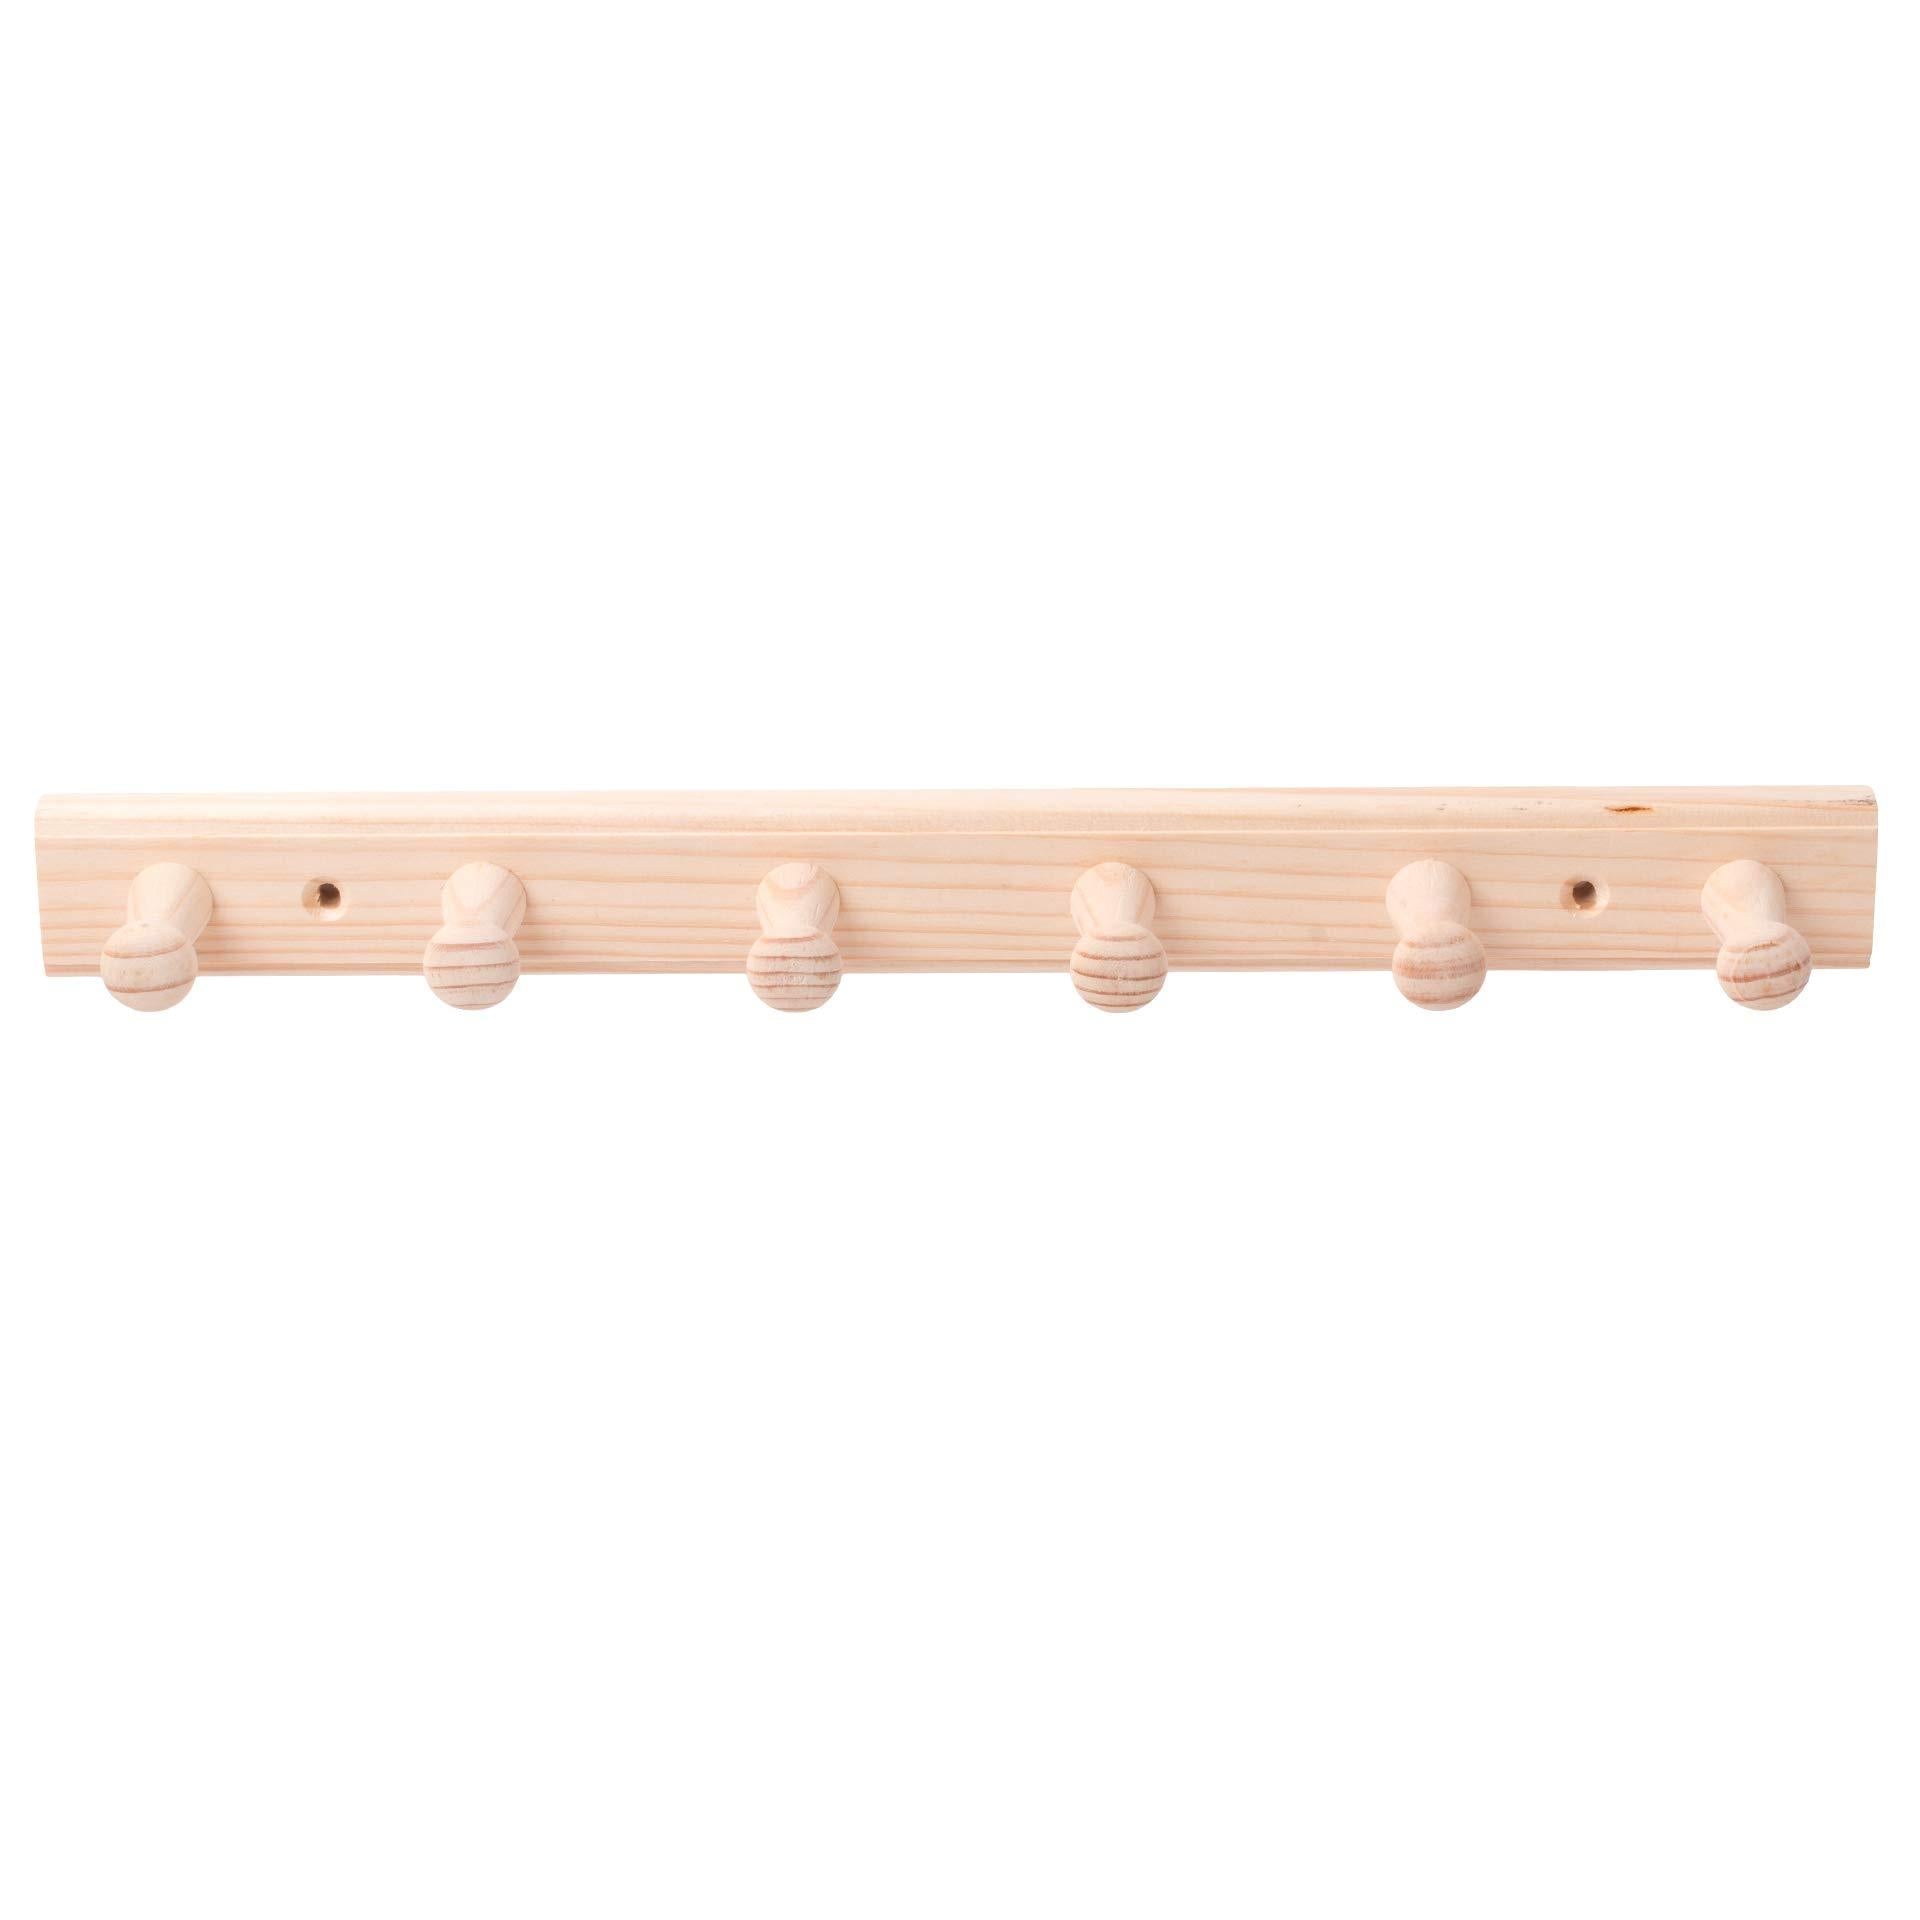 Ho LouMaxx mit Wandgarderobe 6 Hakenleiste – Kiefer aus Holzhaken Holz